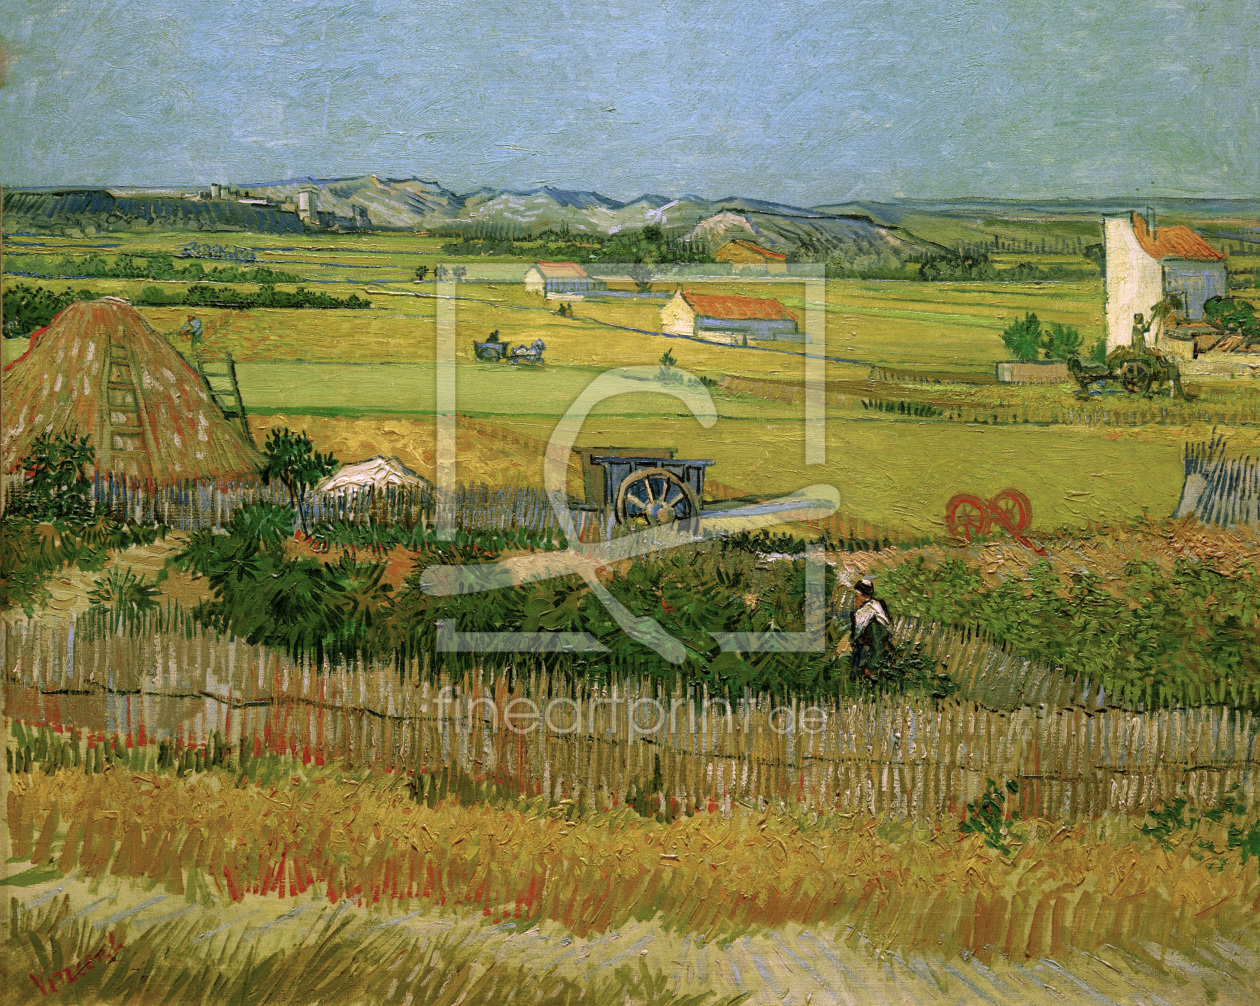 Bild-Nr.: 30003218 V.v.Gogh, The Harvest / Paint./ 1888 erstellt von van Gogh, Vincent